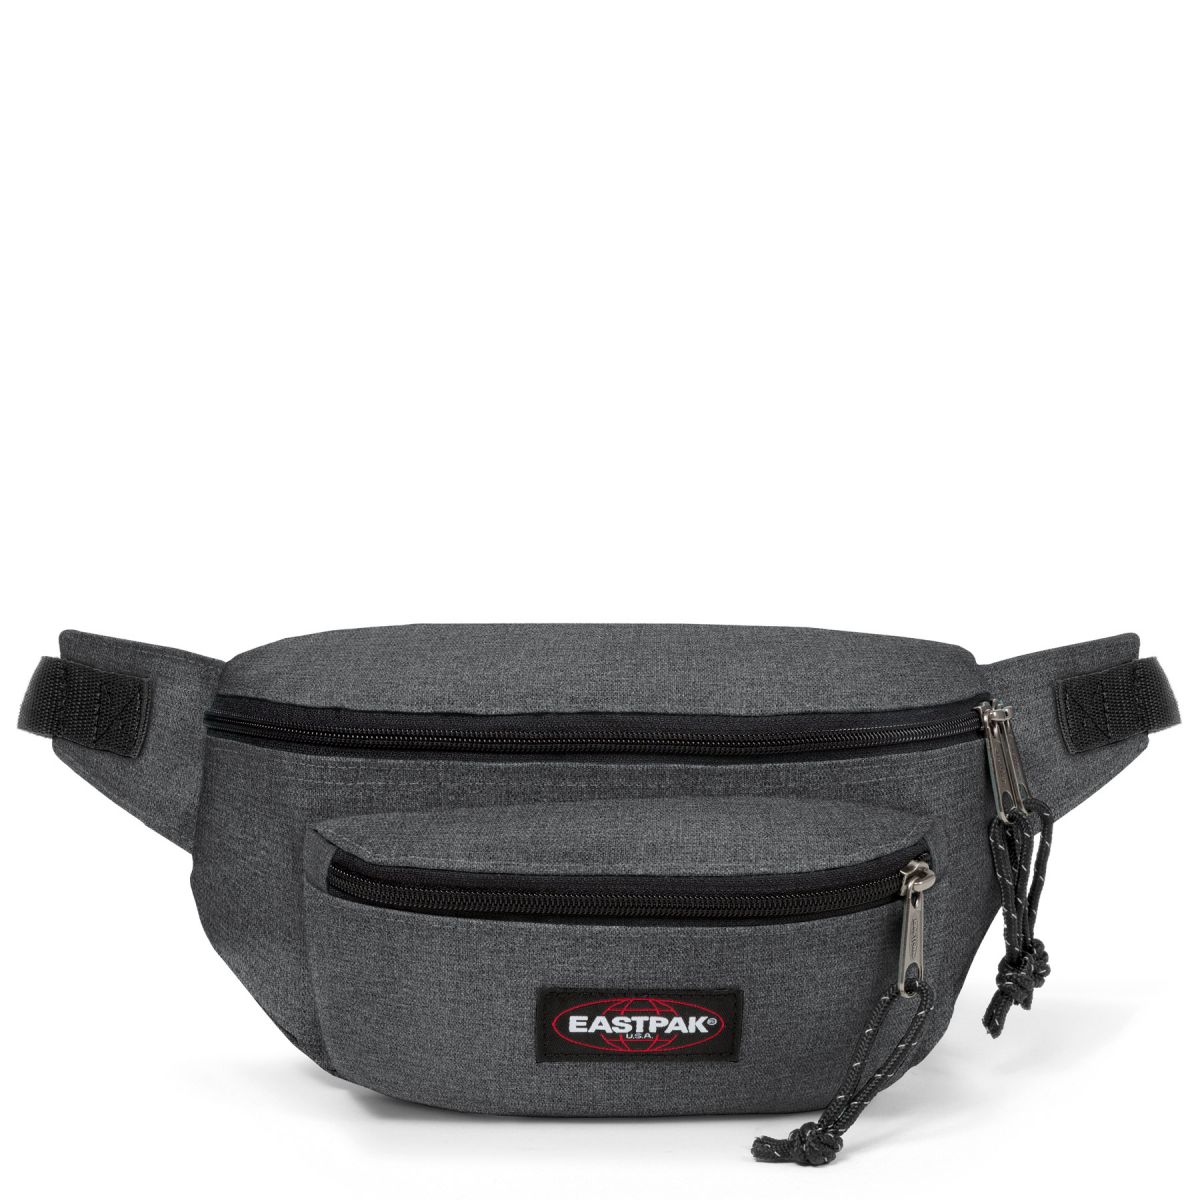 Eastpak Tasche / Mini Bag Doggy Bag Black Denim-3 L